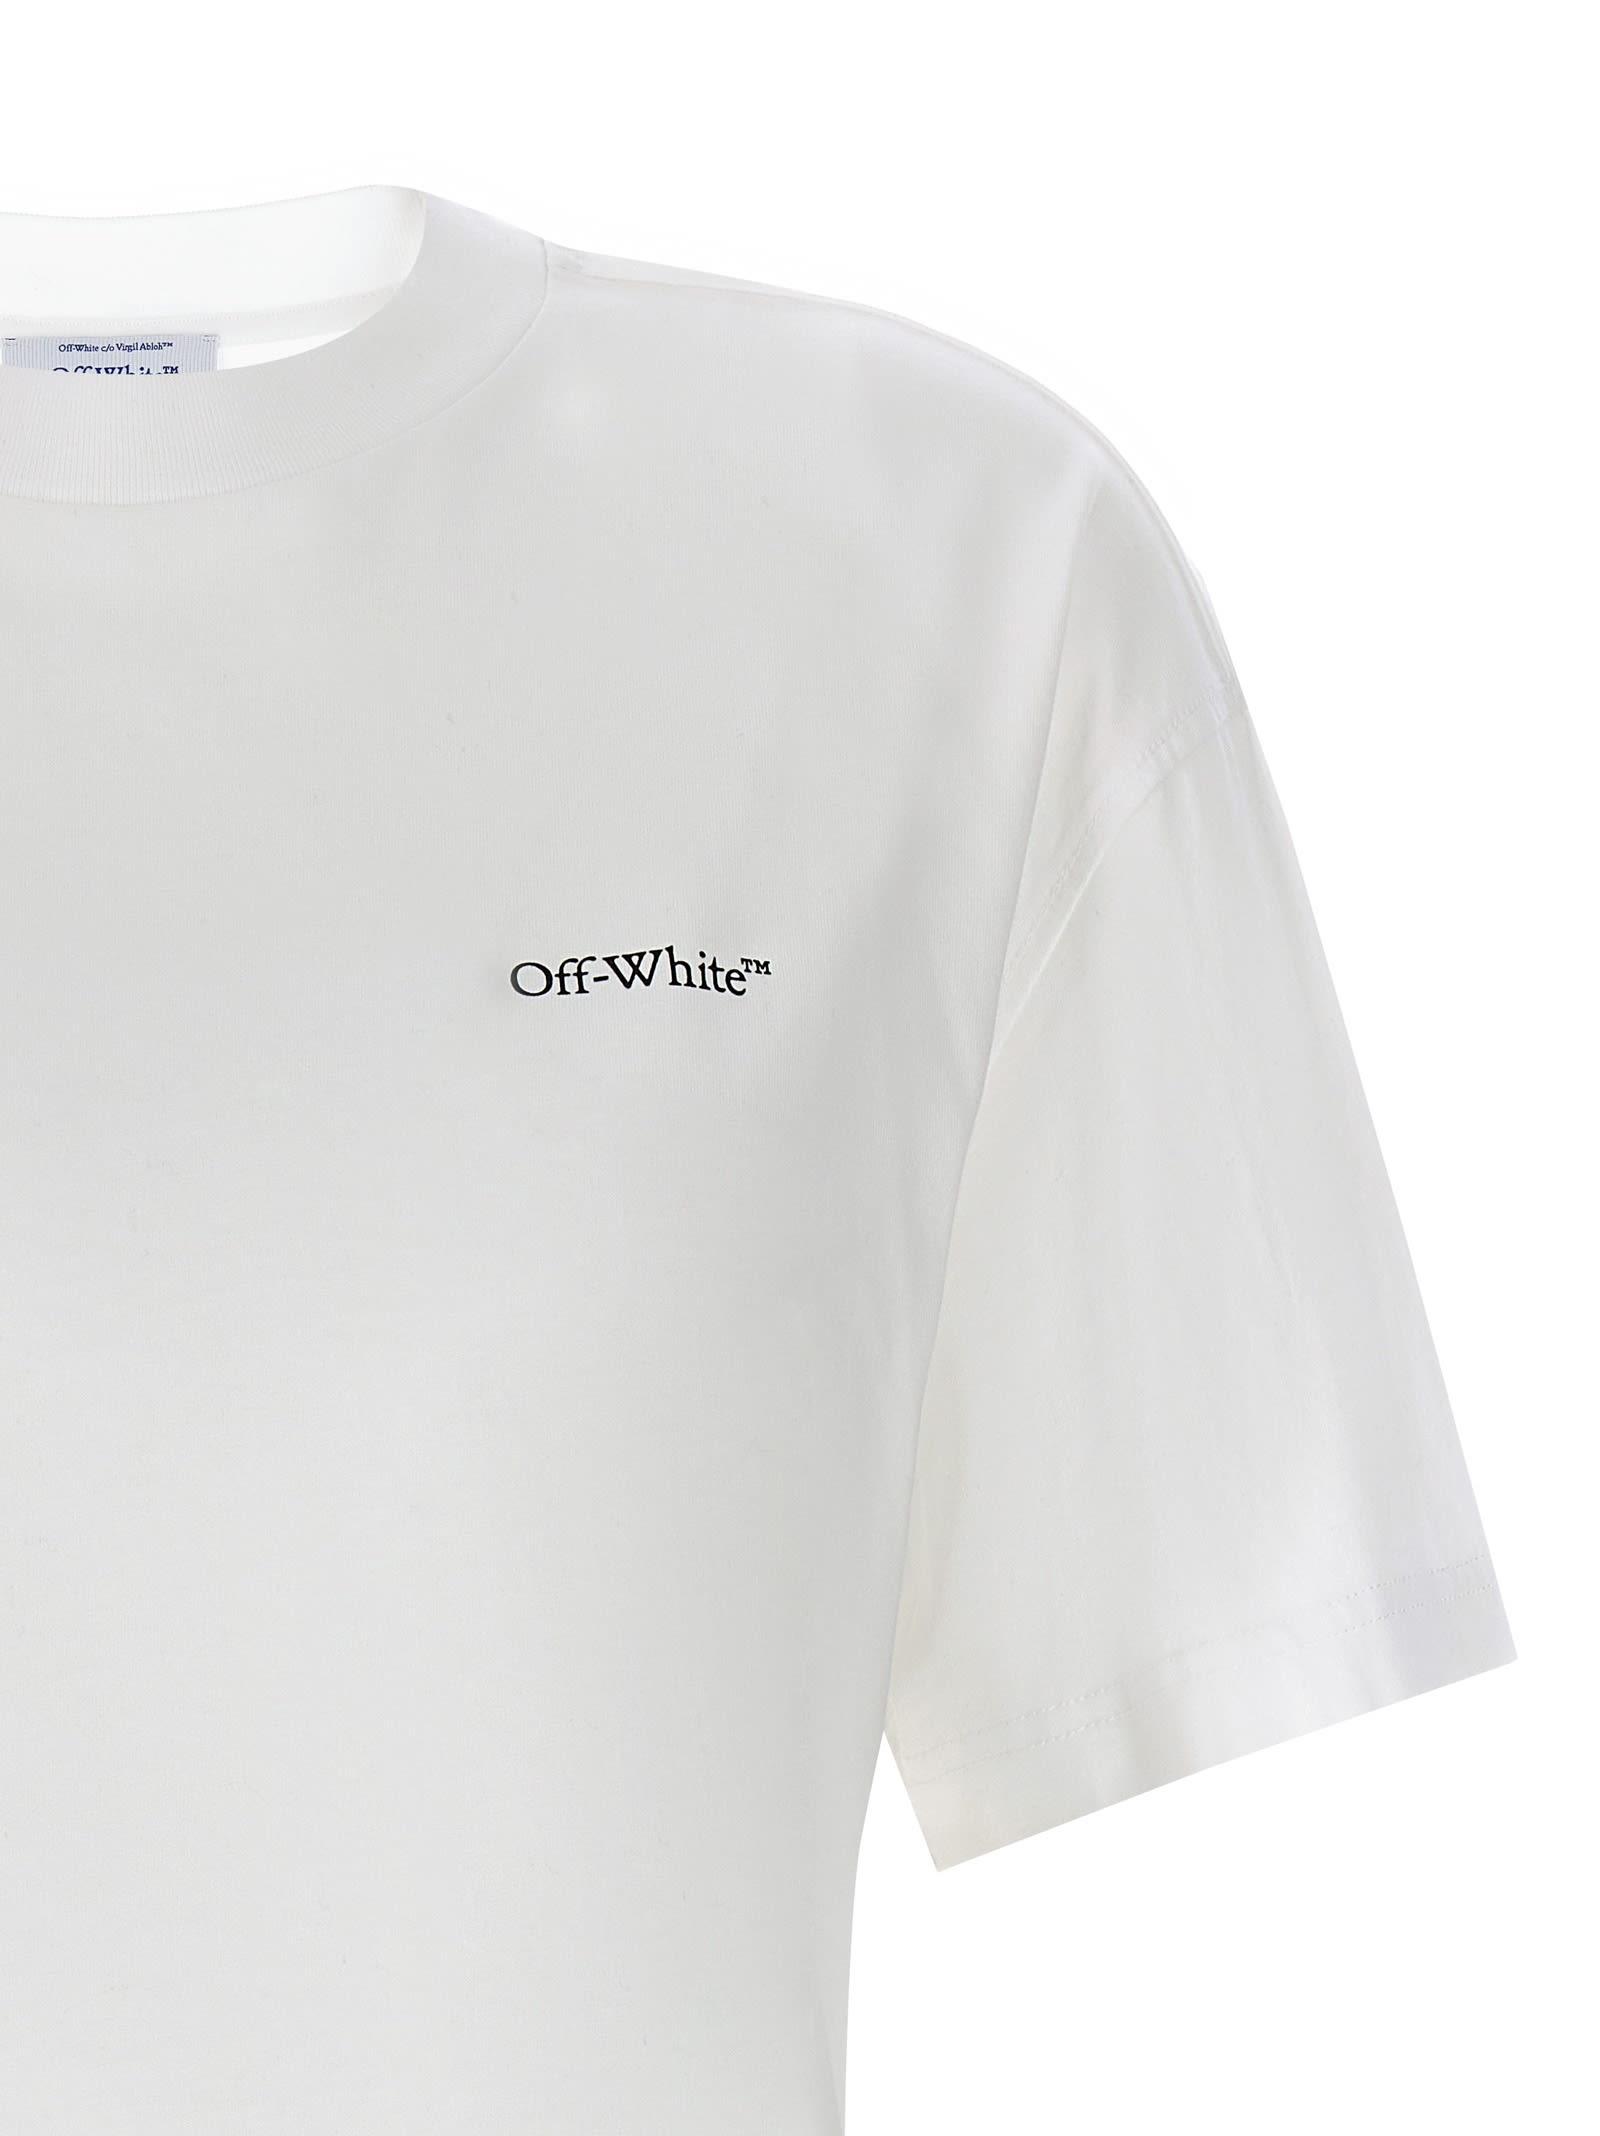 Off-White Black Xray Arrow T-Shirt